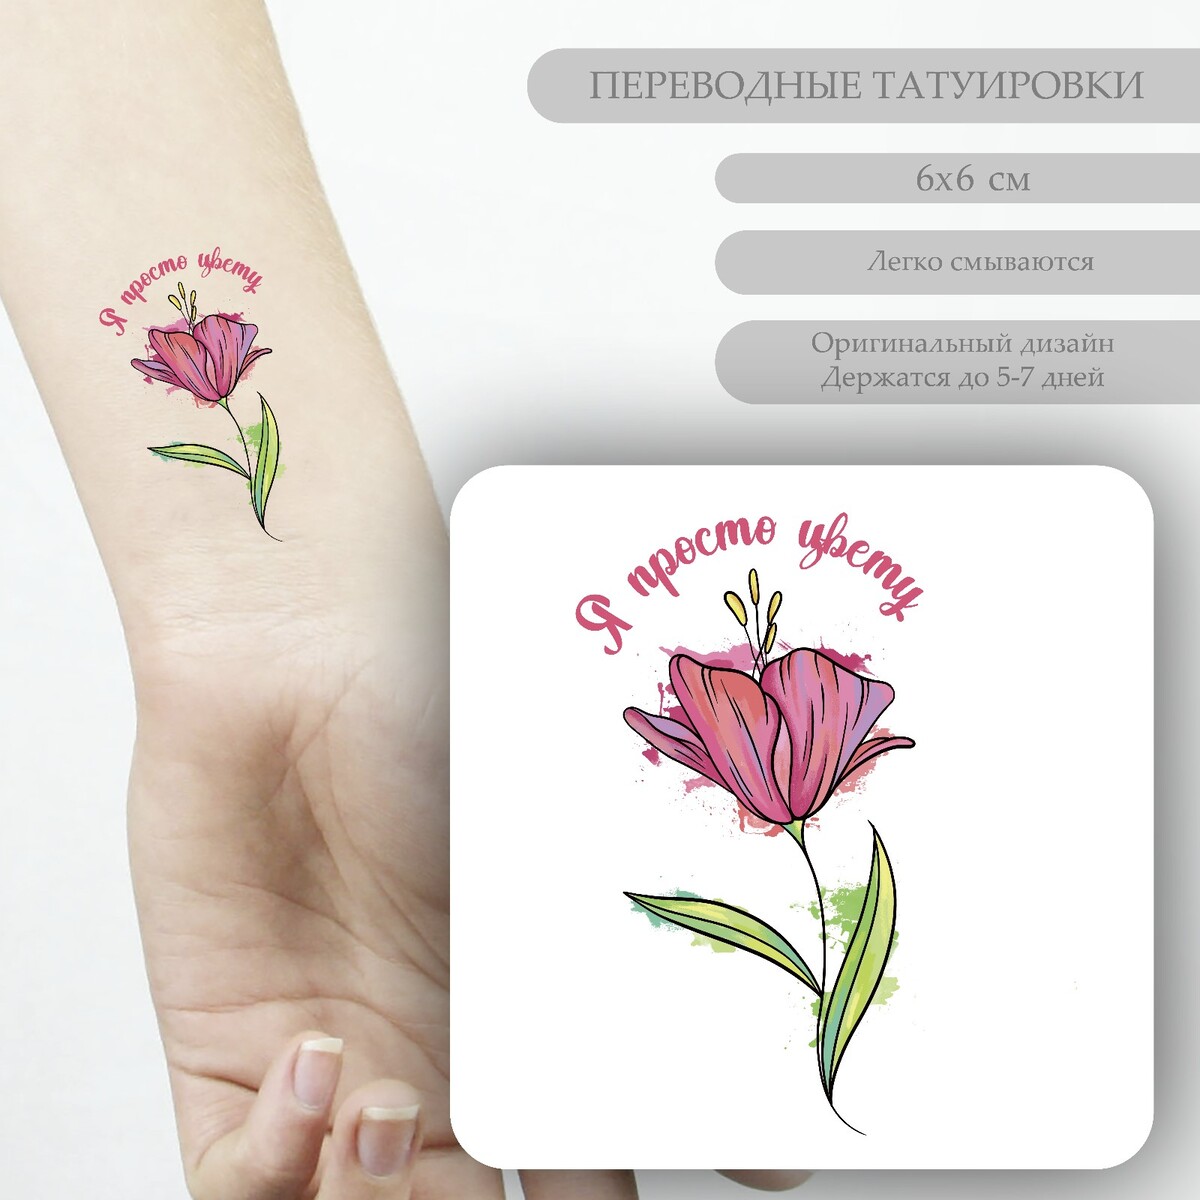 Tattooshka #1 интернет-магазин временных тату онлайн в Украине